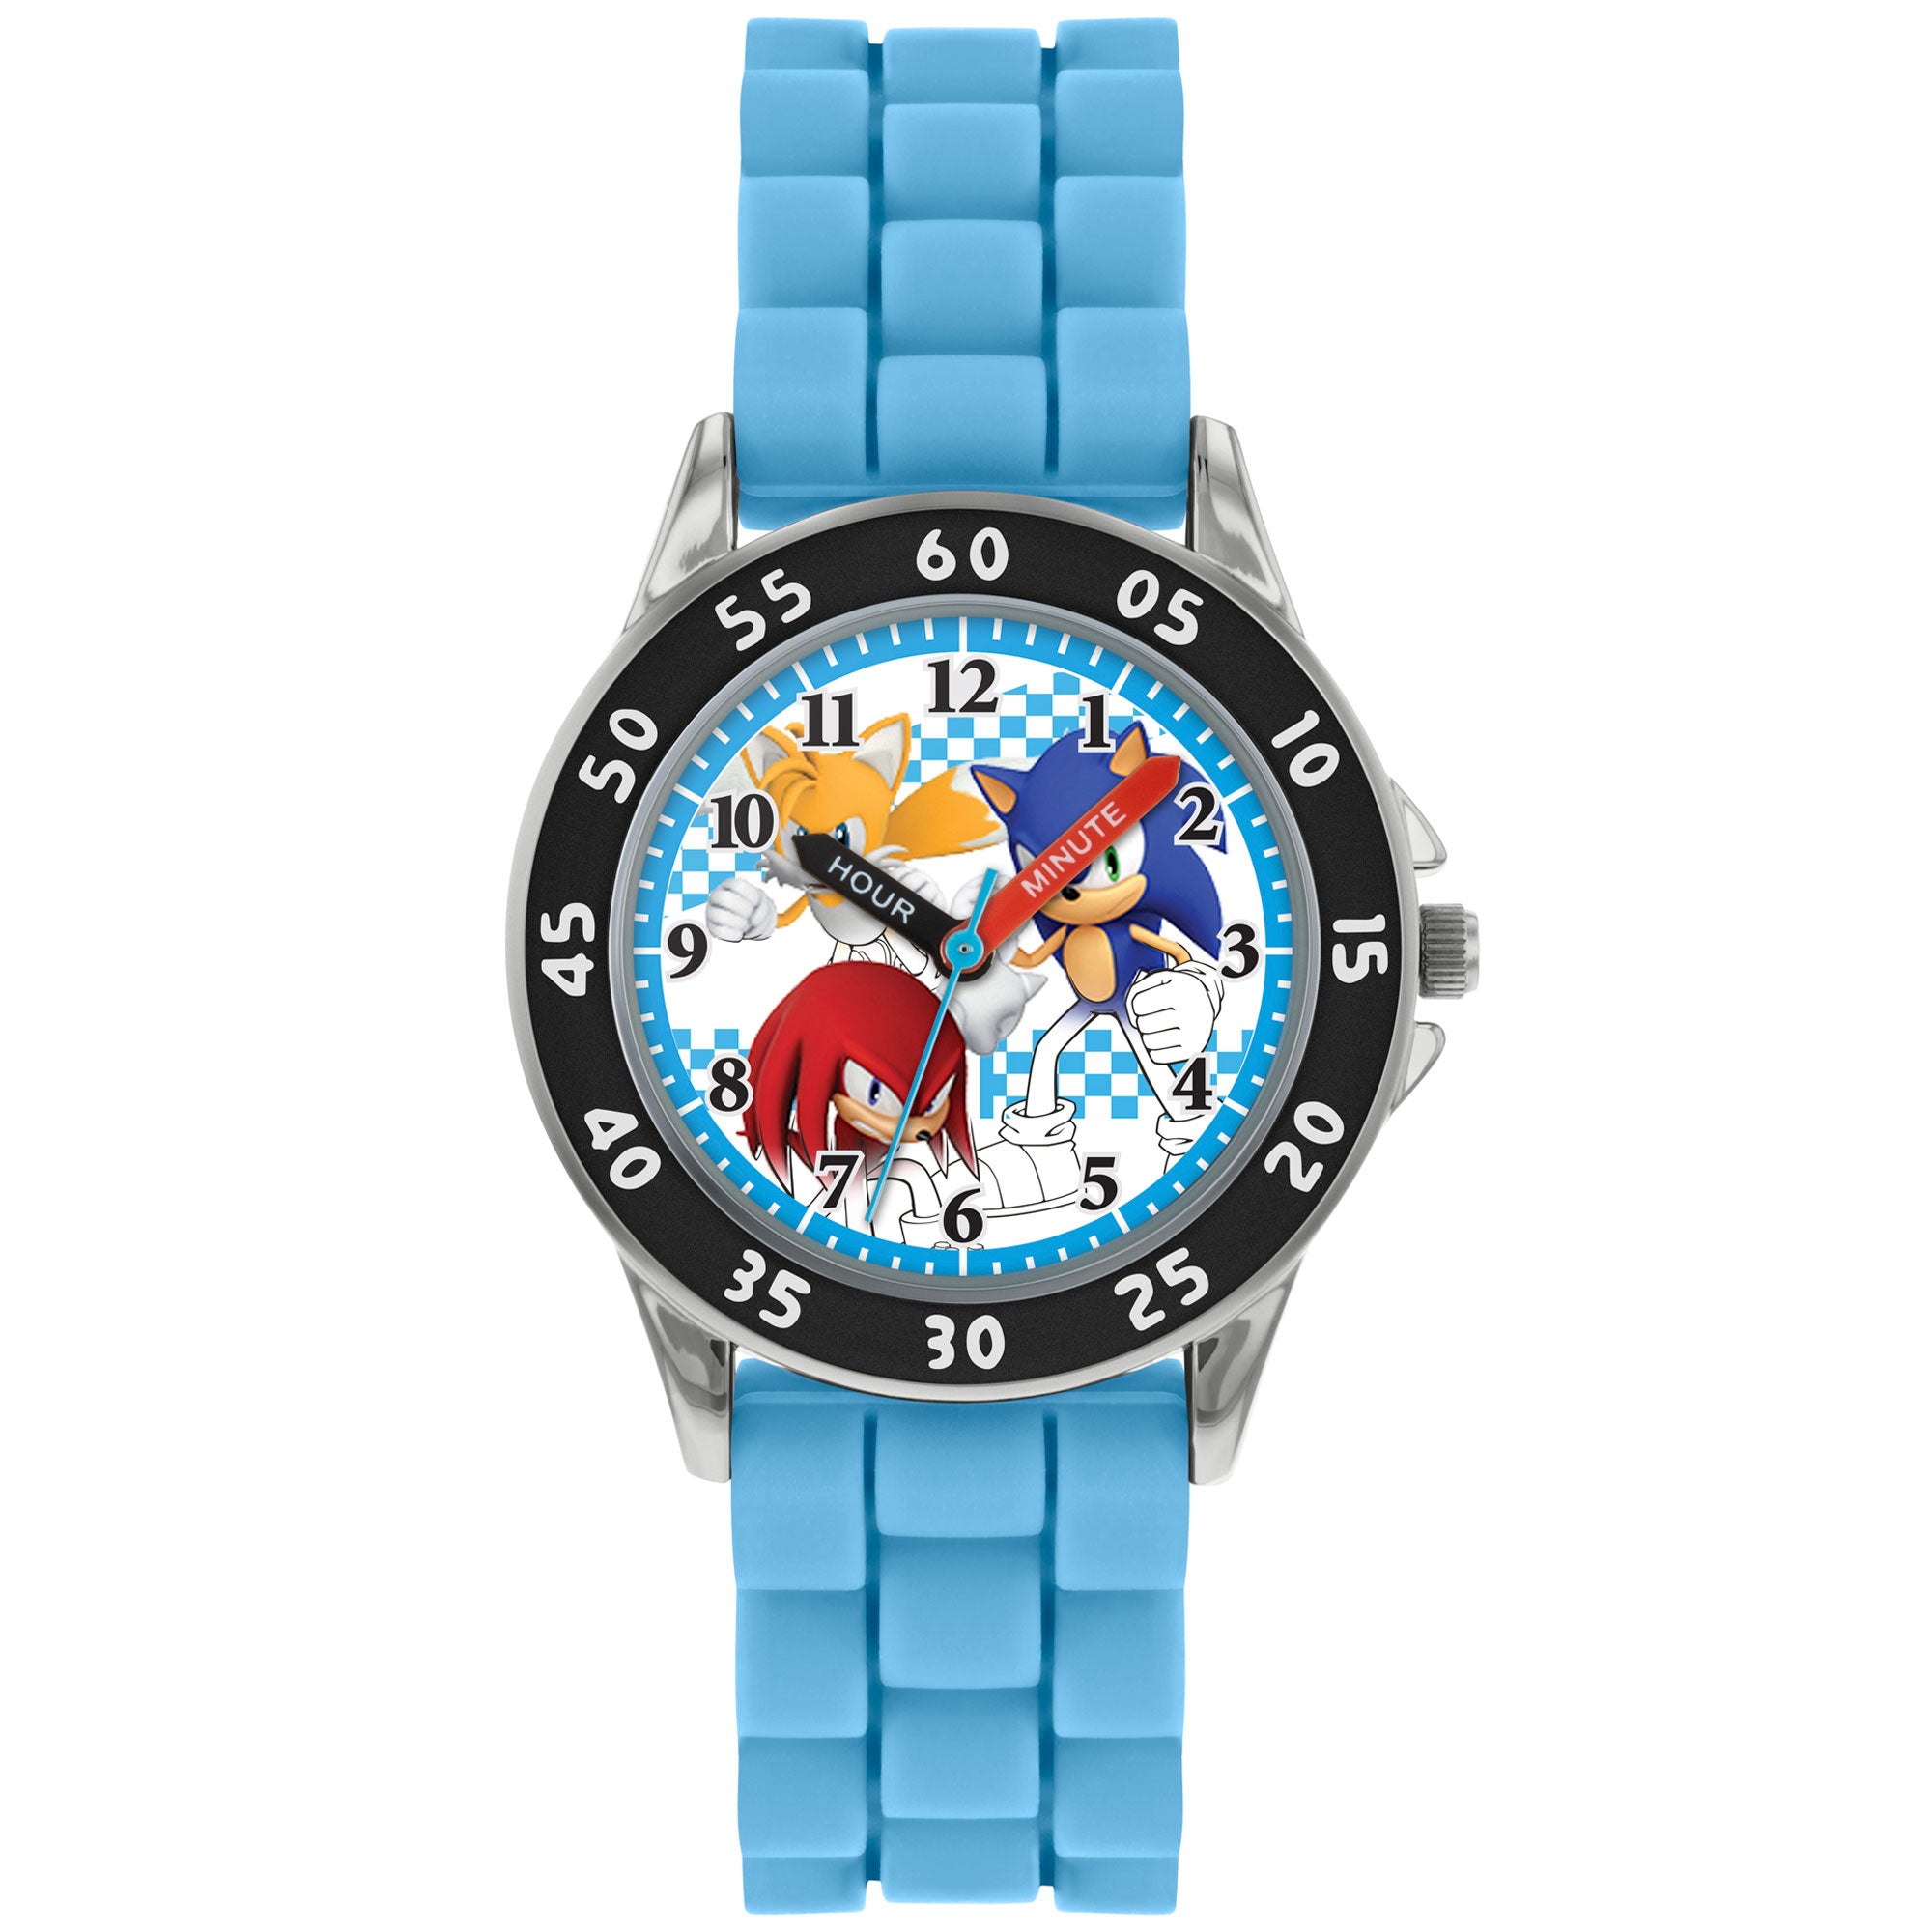 View Sonic The Hedgehog Junior Time Teacher Watch information